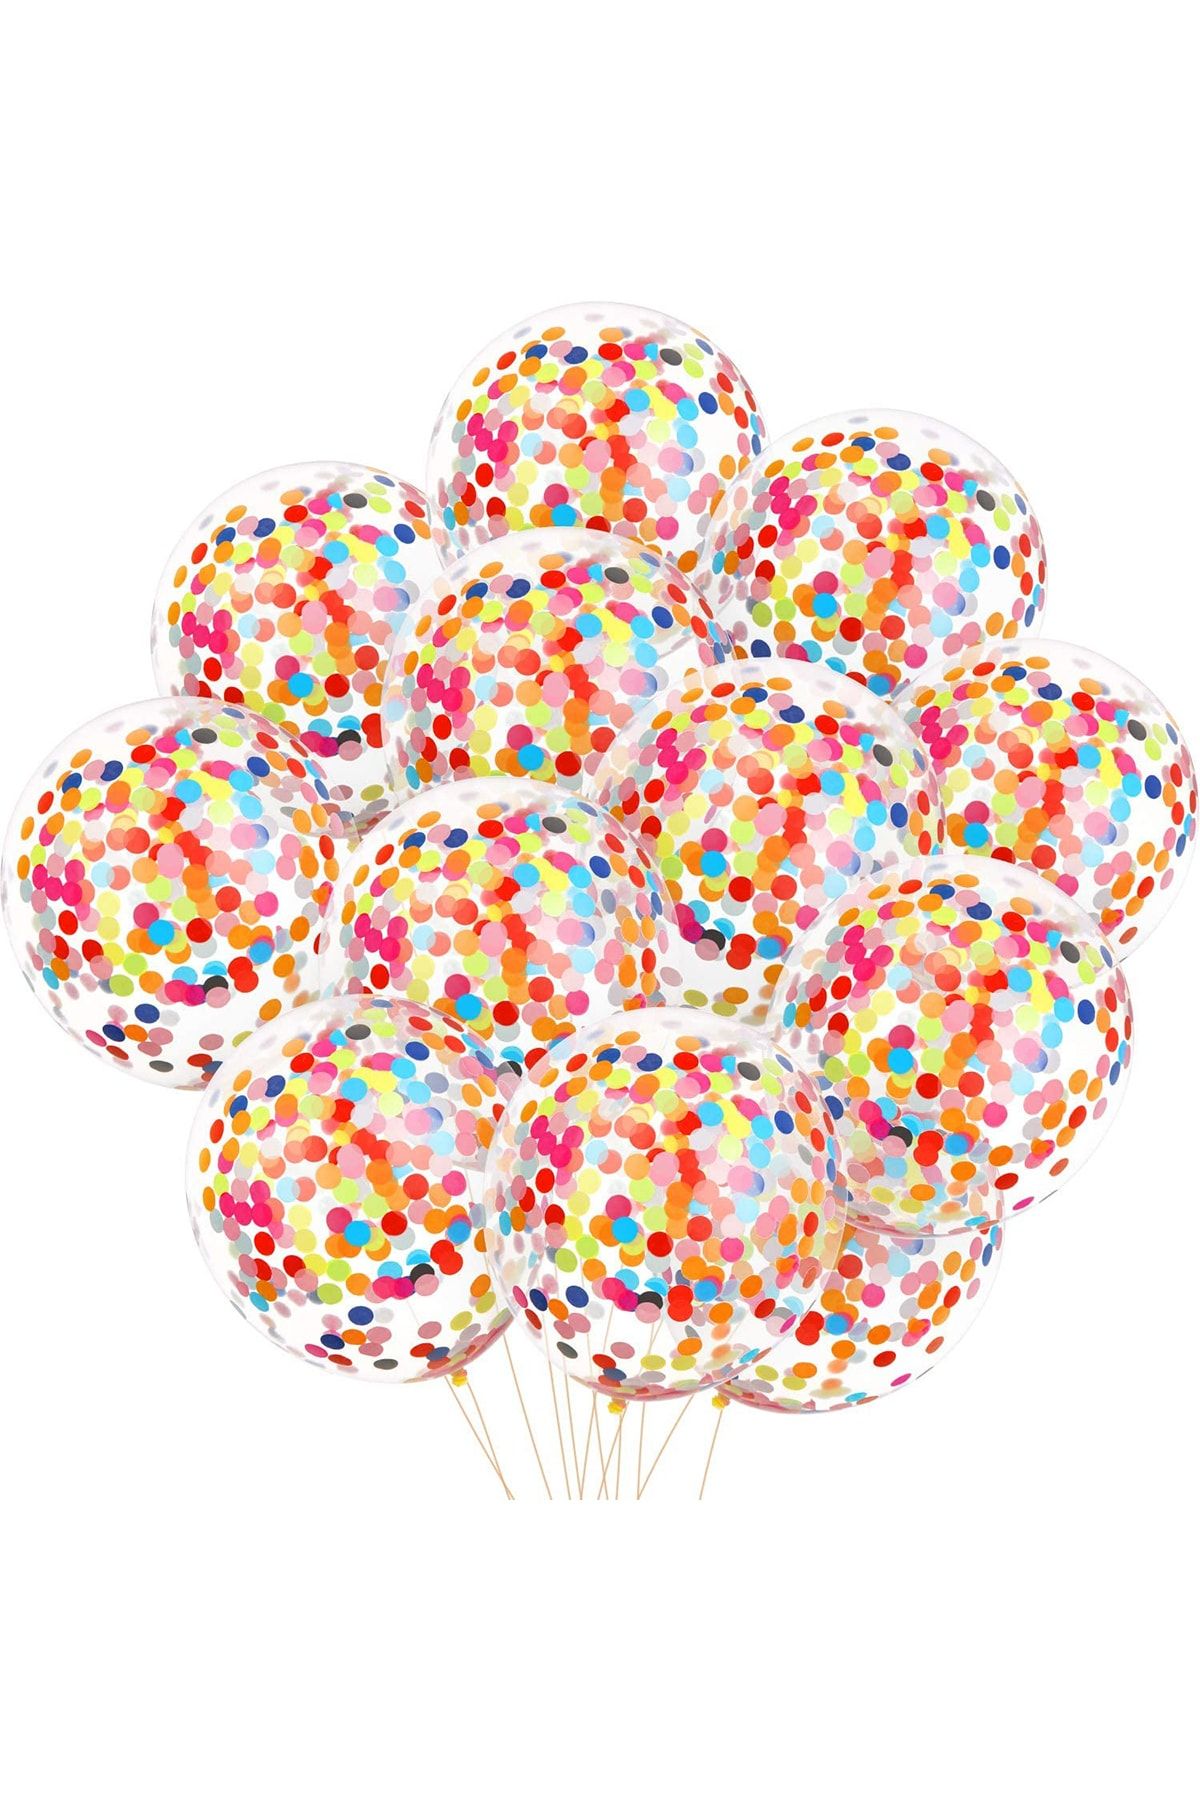 Parti Dolabı 10 Adet Rengarenk Konfetili Şeffaf Balon + Balon Içi Pul Konfetisi Set